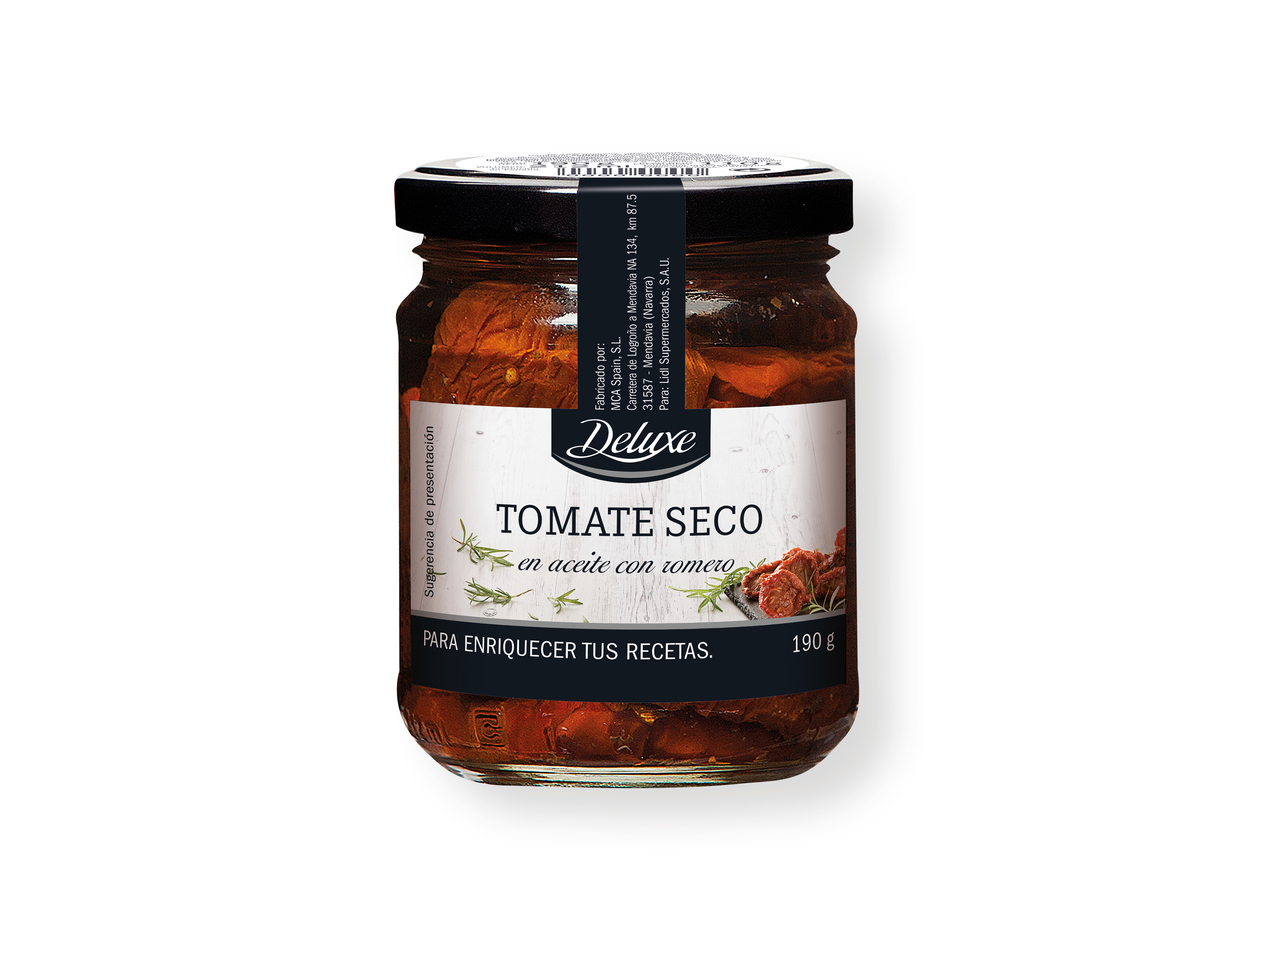 'Deluxe(R)' Tomate seco en aceite con romero